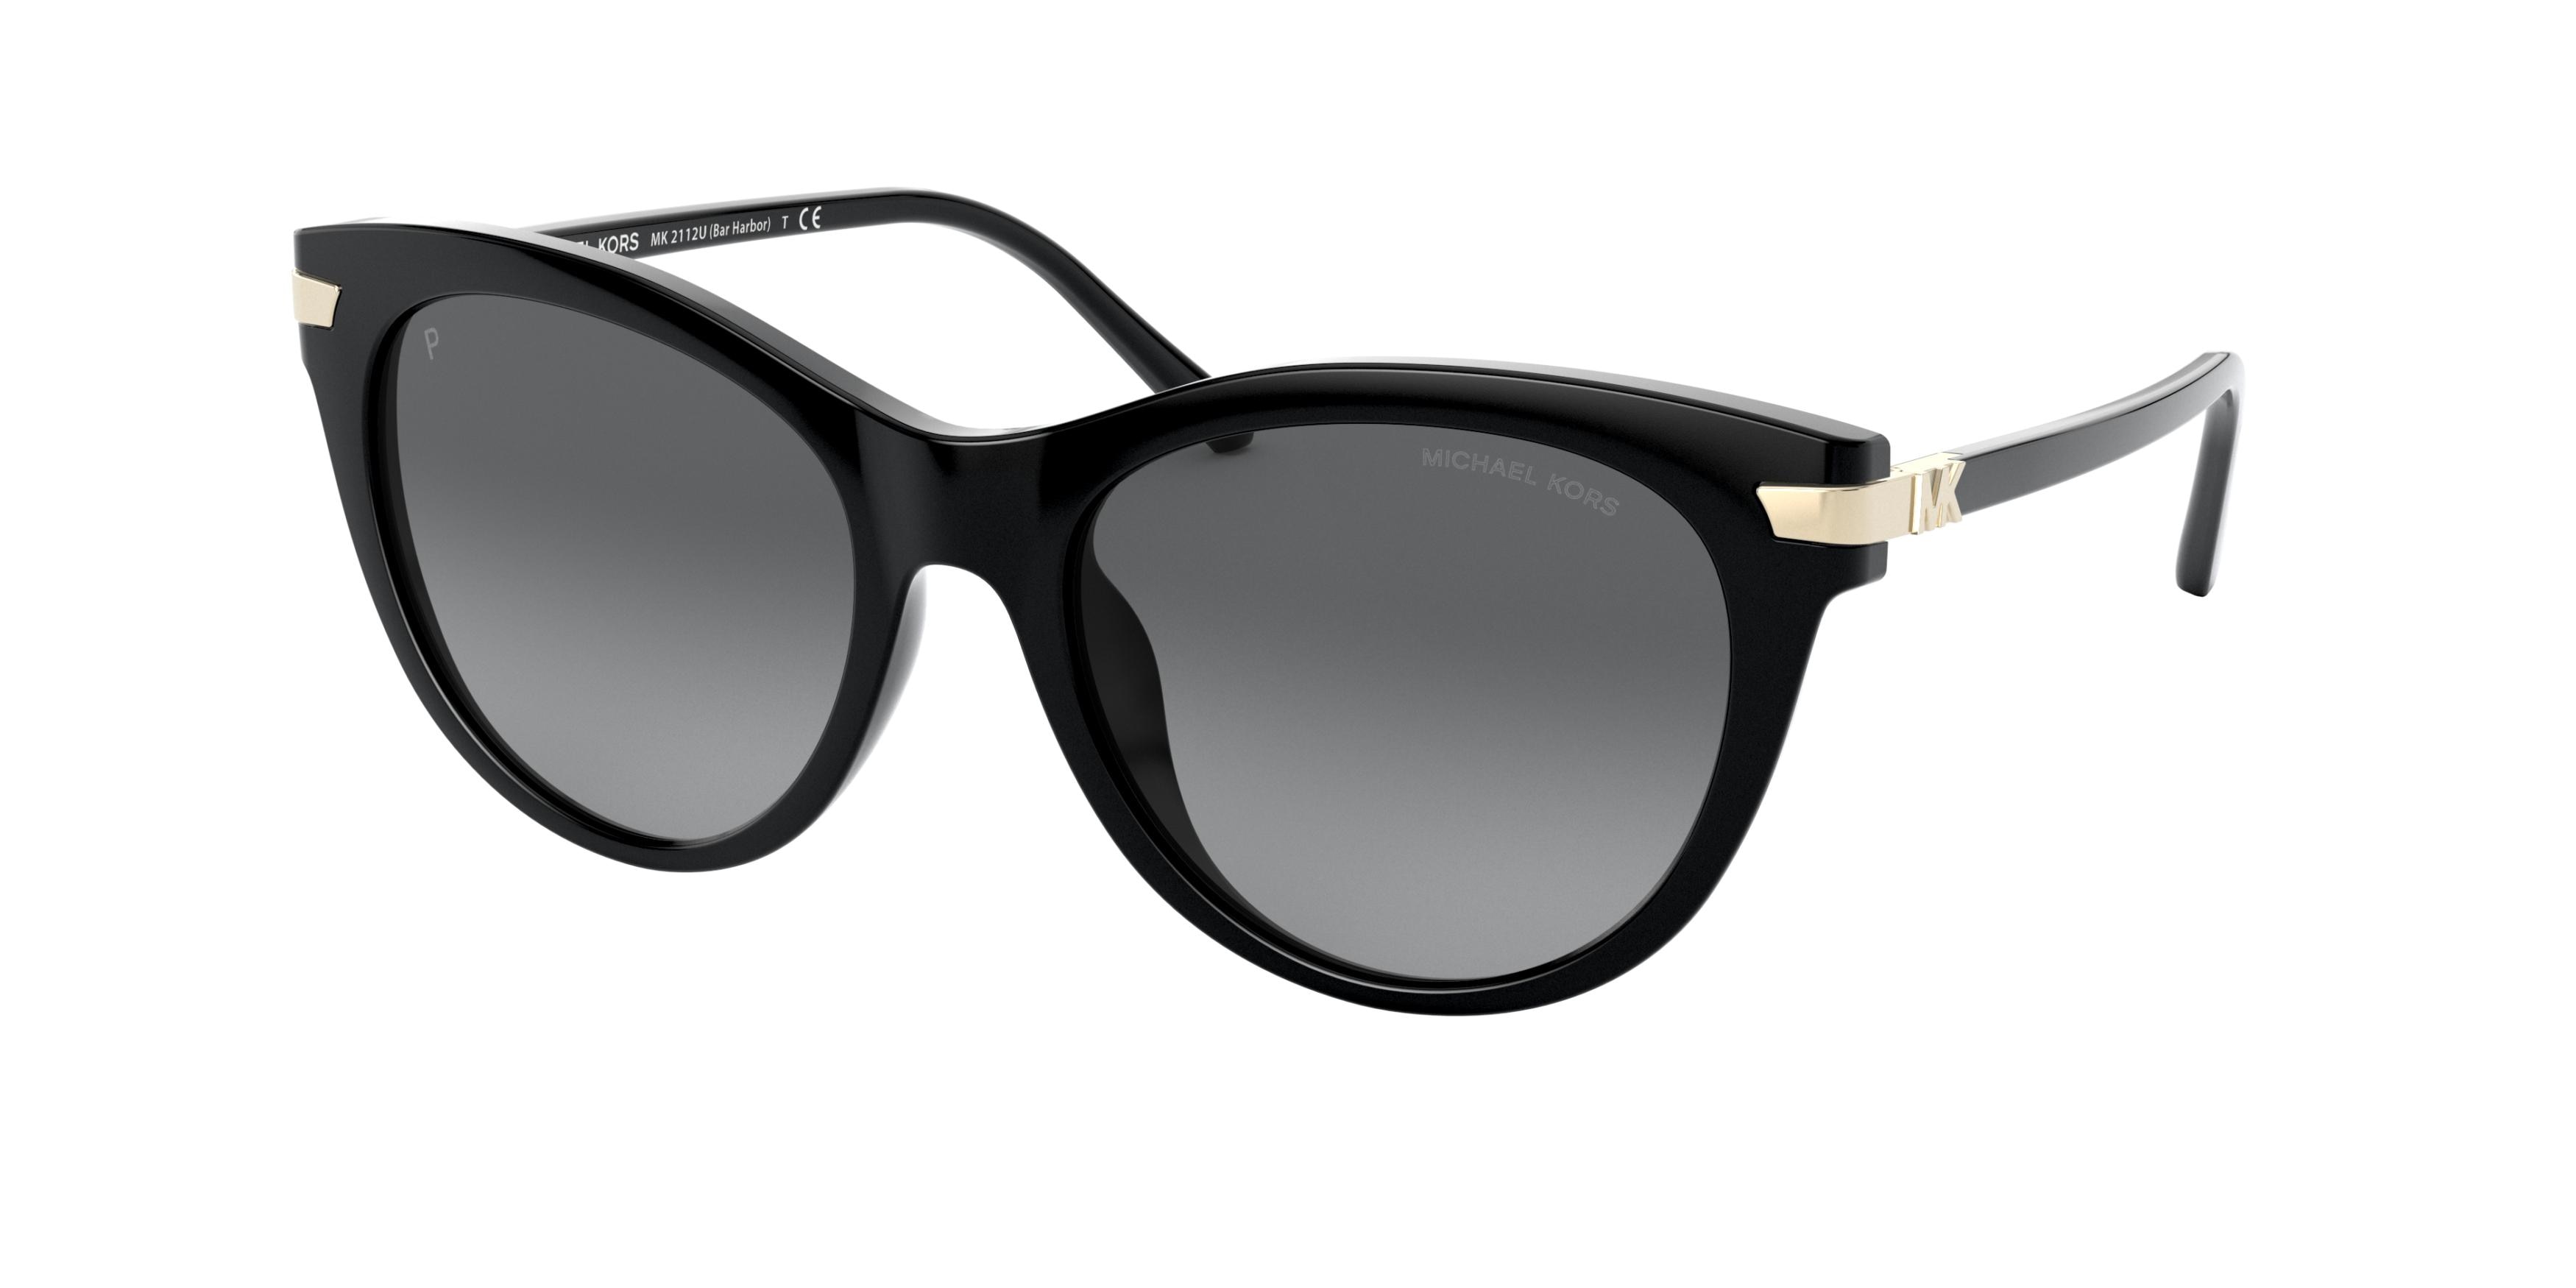 Buy Michael Kors Sunglasses directly from OpticsFast.com